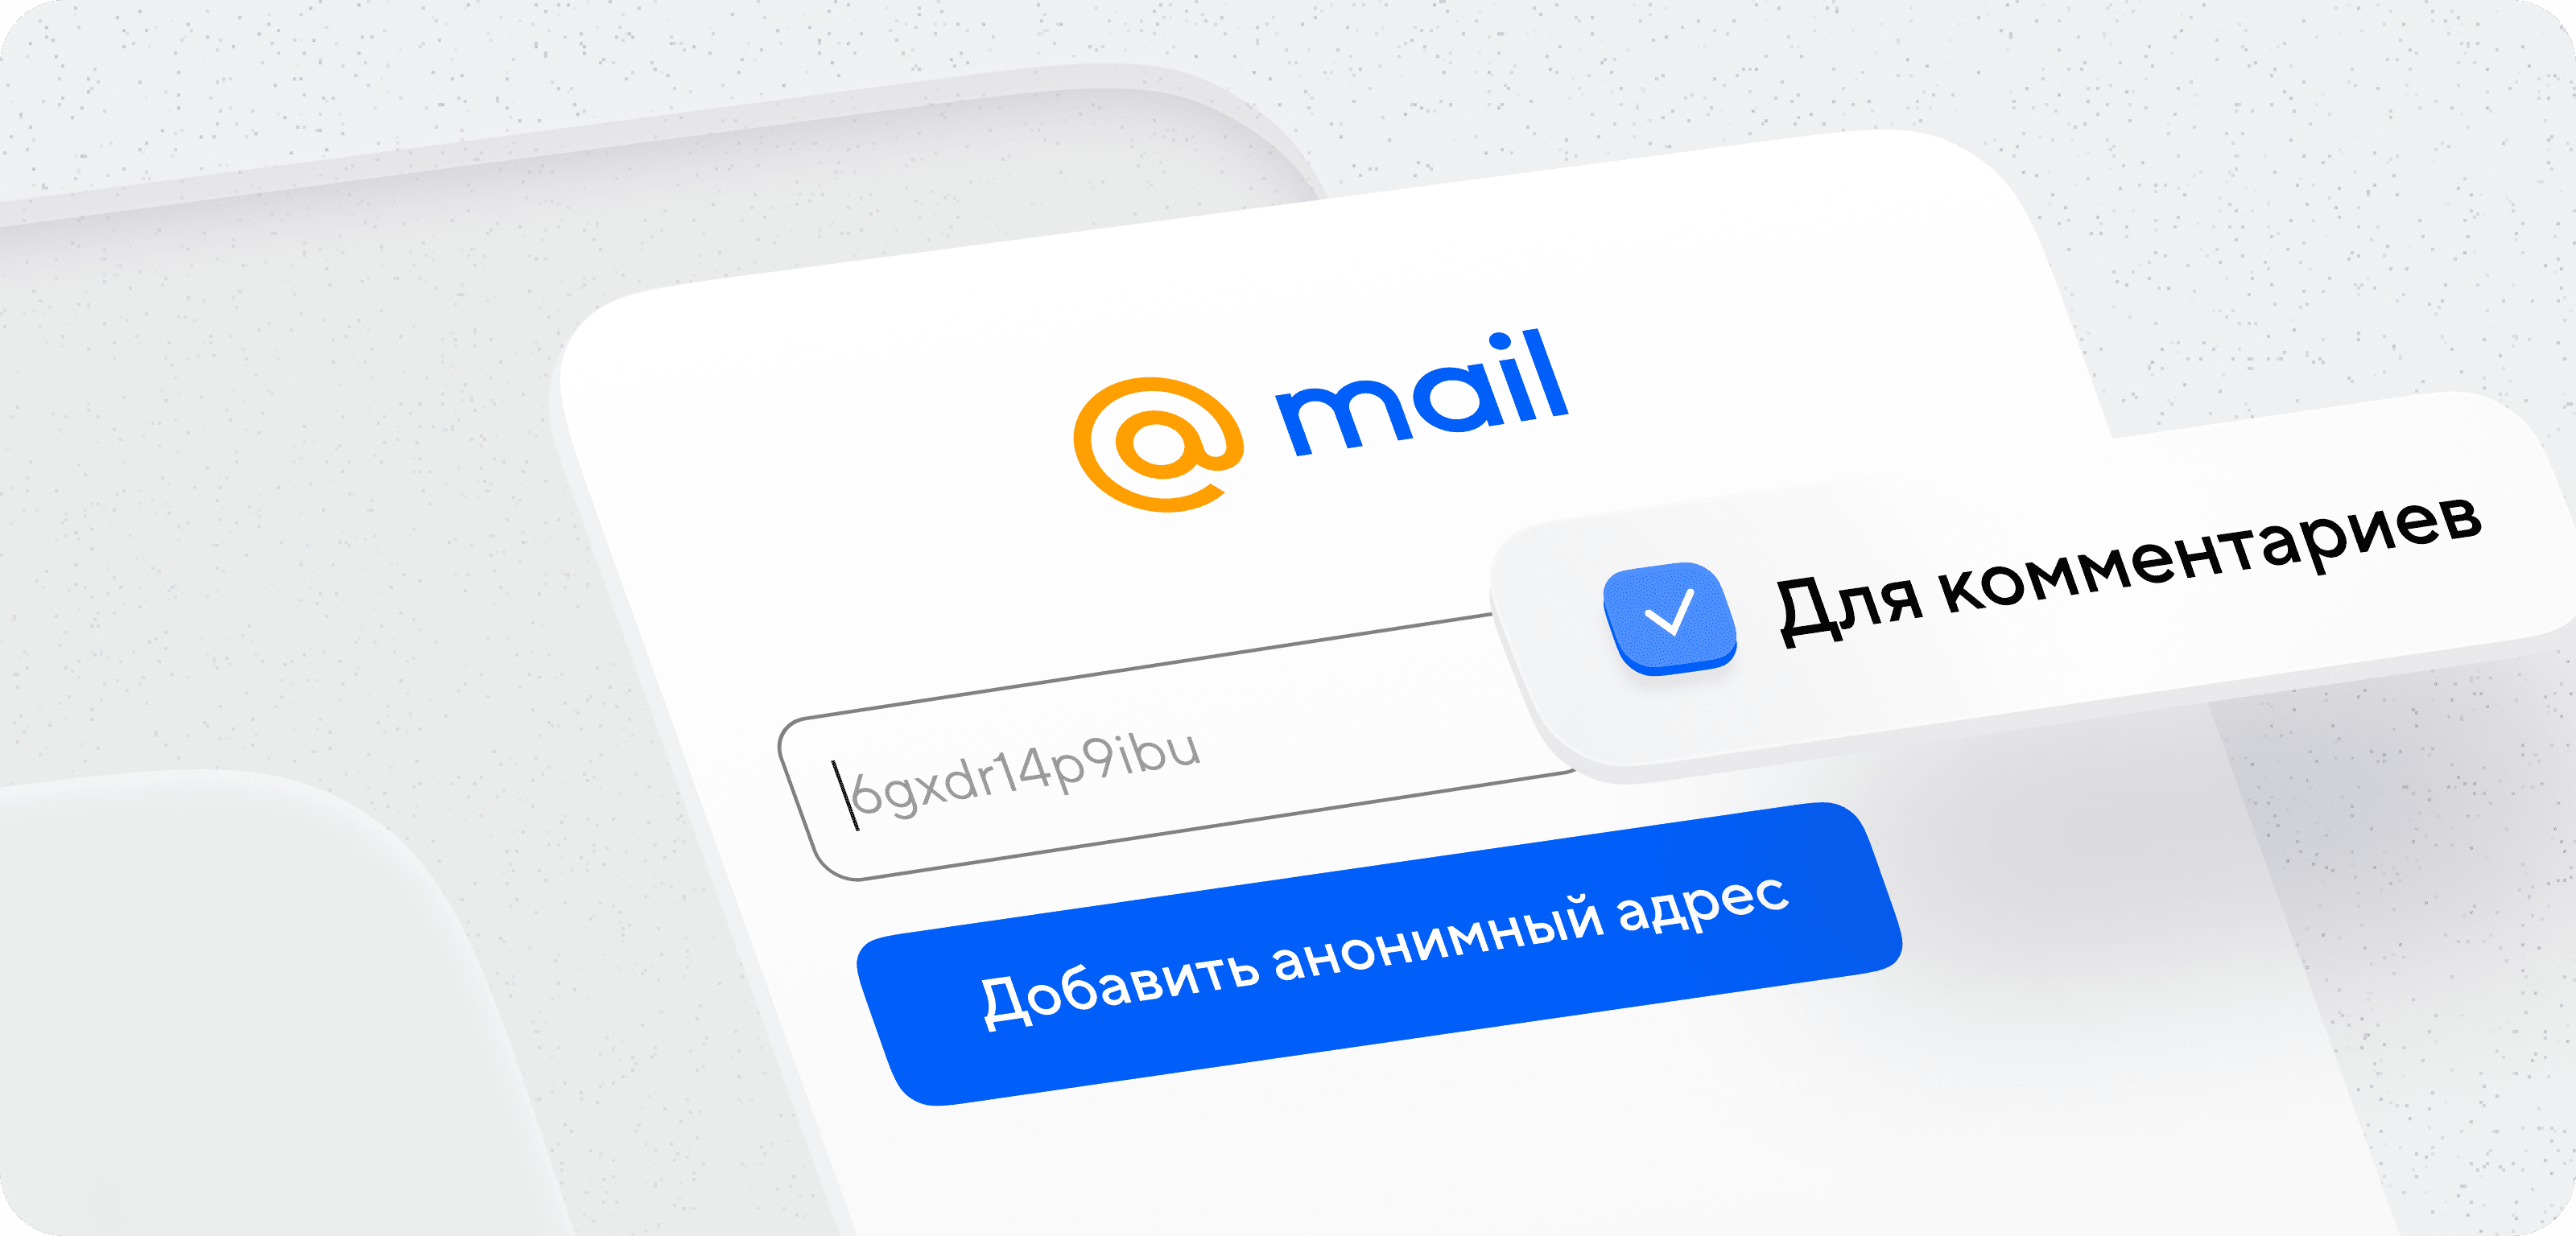 Блог Mail.ru